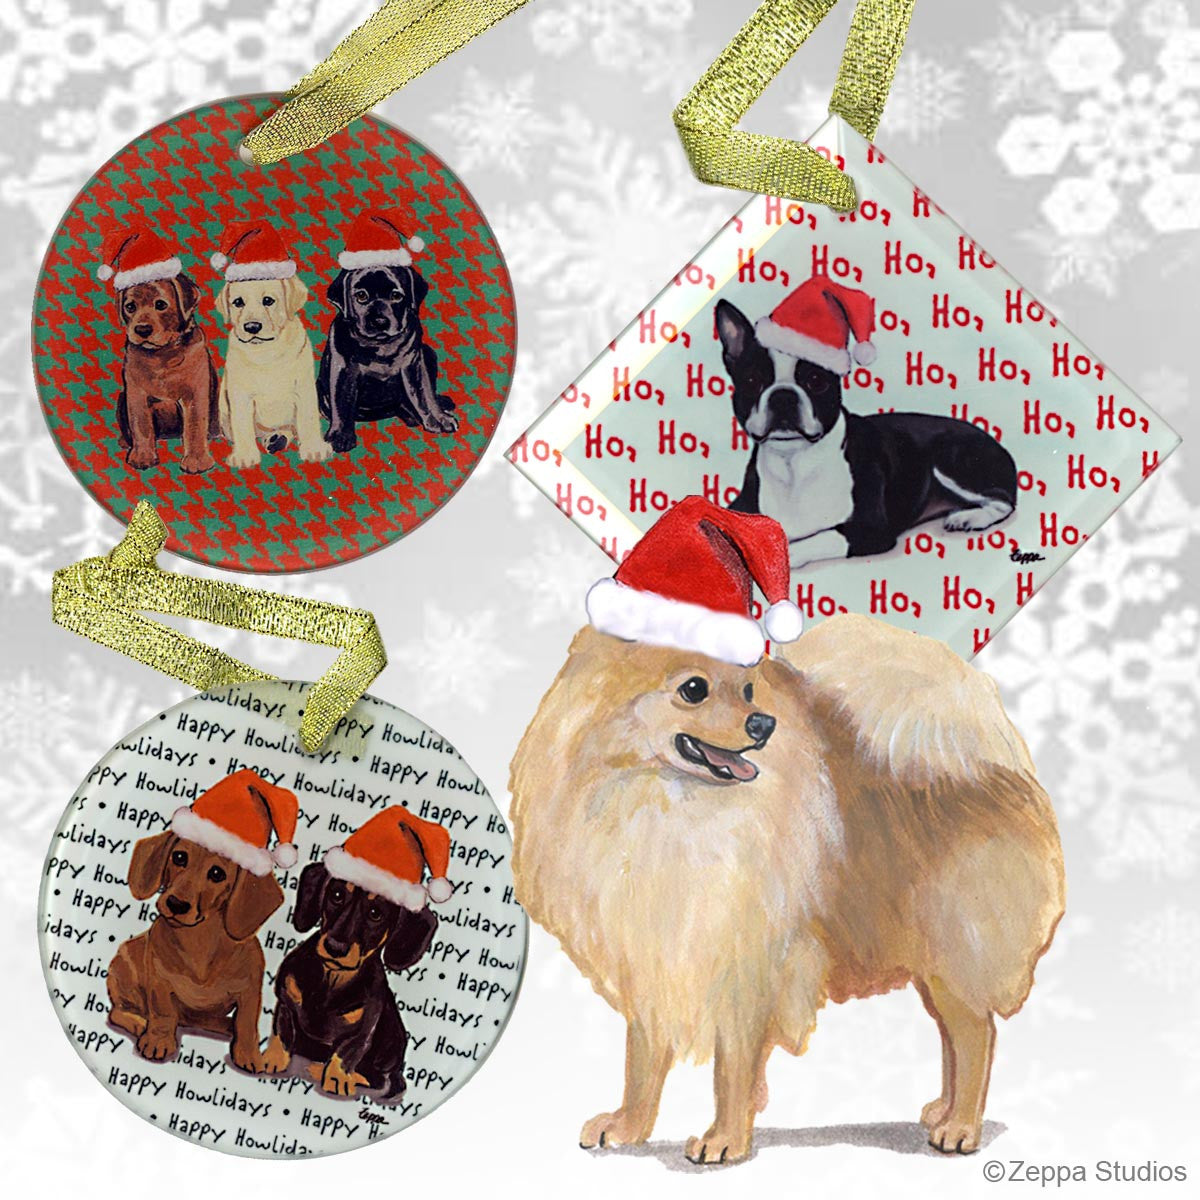 Pomeranian Christmas Ornaments